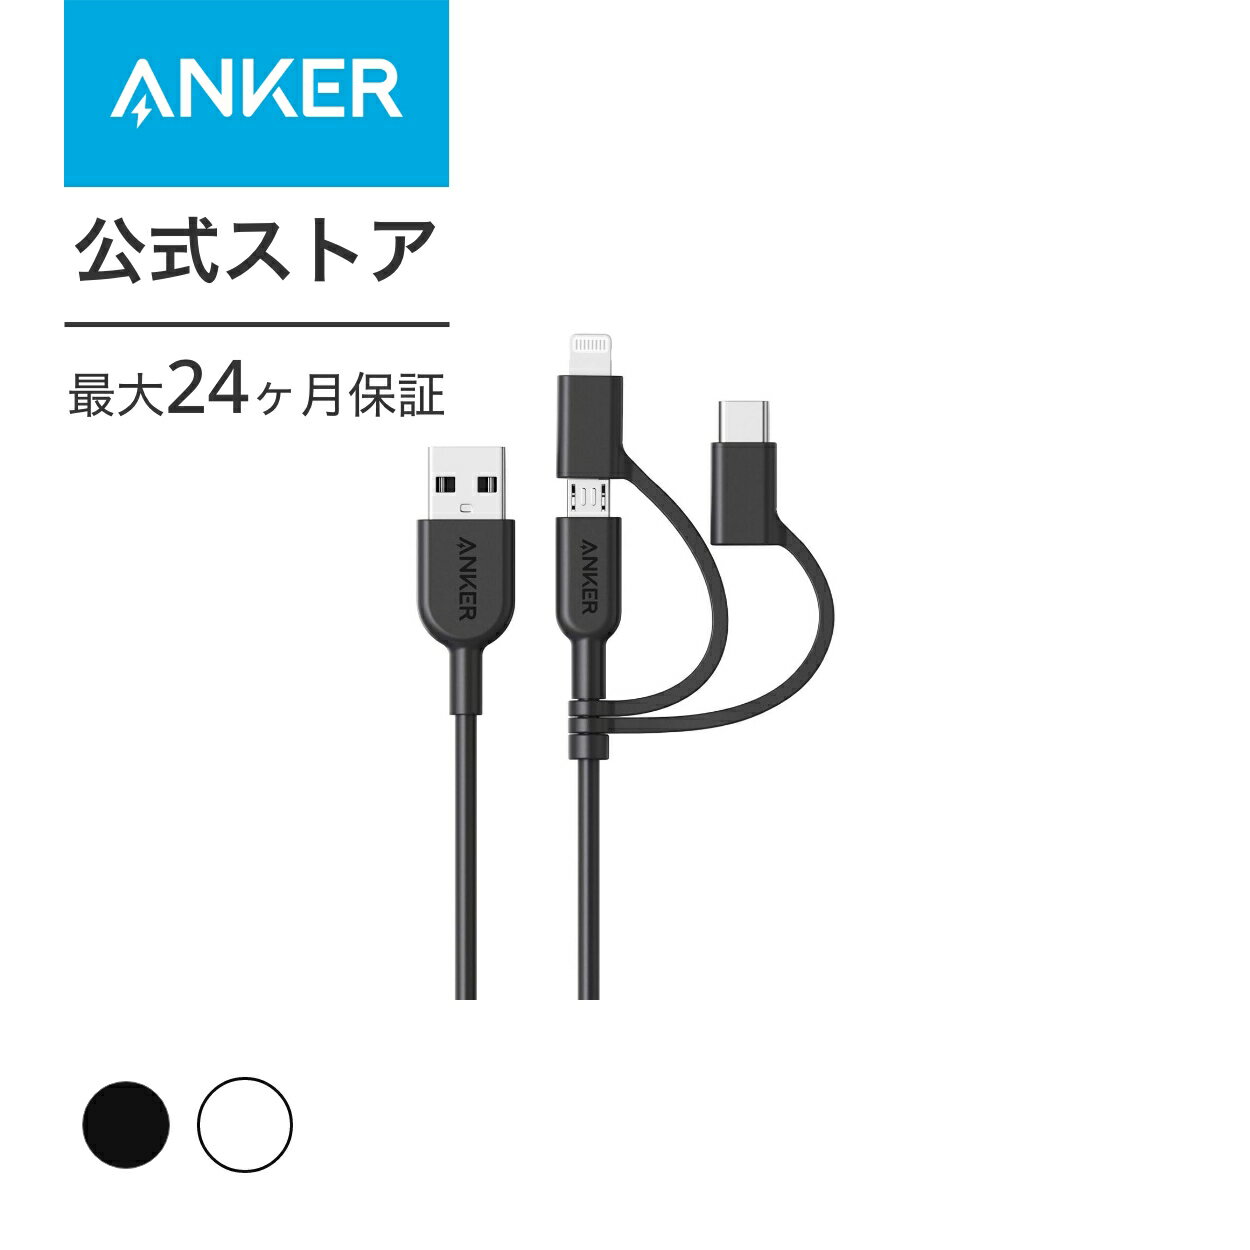 Anker PowerLine II 3-in-1 ケーブル（ライトニングUSB/USB-C/Micro USB端子対応ケーブル）【Apple MFi認証取得】iPhone XS/XS Max/XR 対応 (0.9m ブラック ホワイト)